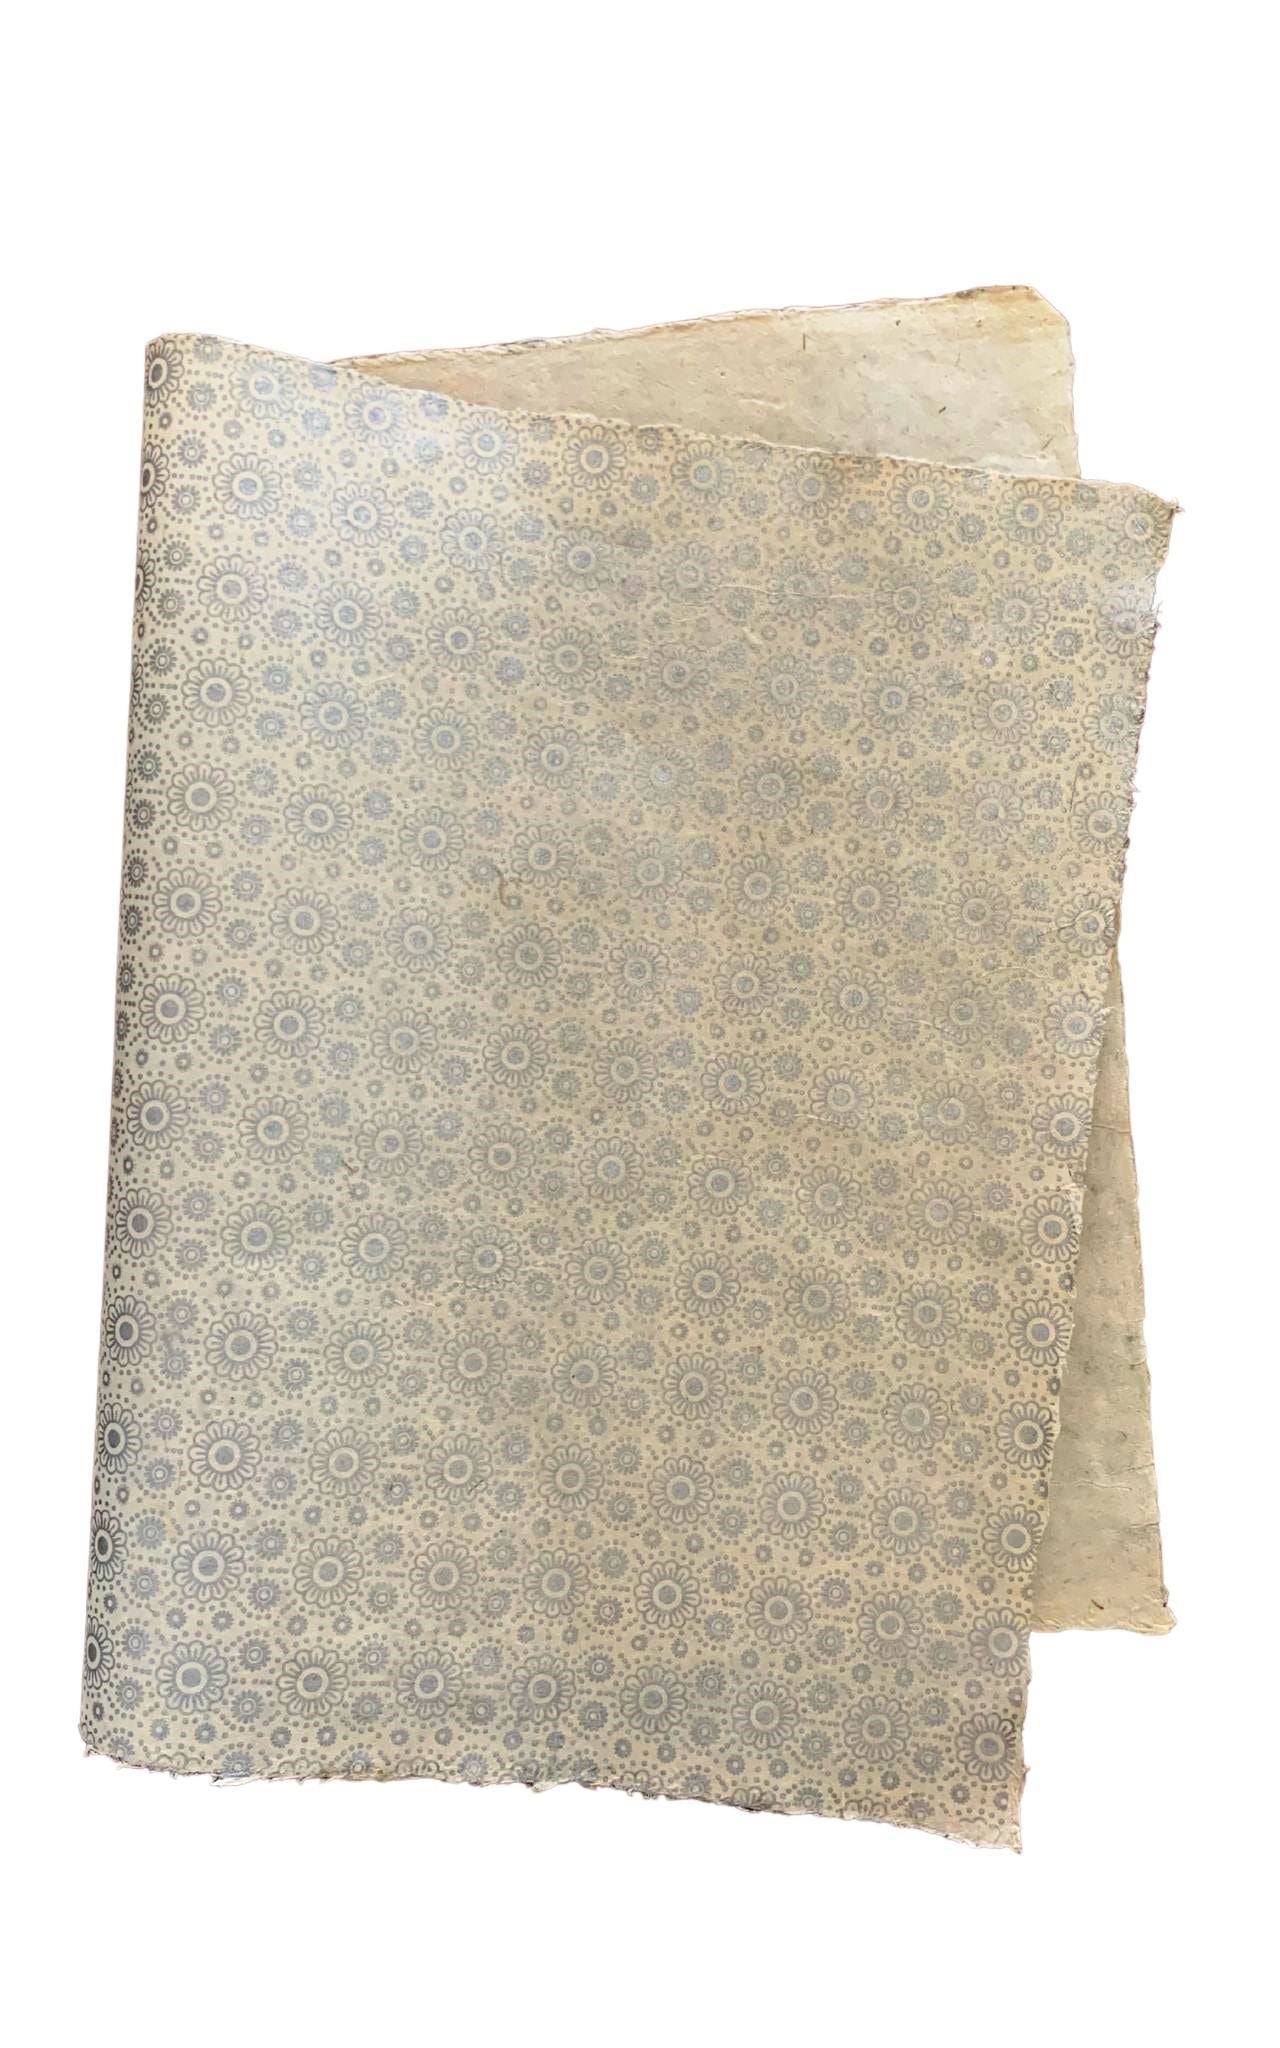 Surya Australia Treeless Lokta Paper Sheets from Nepal - Silver Flower